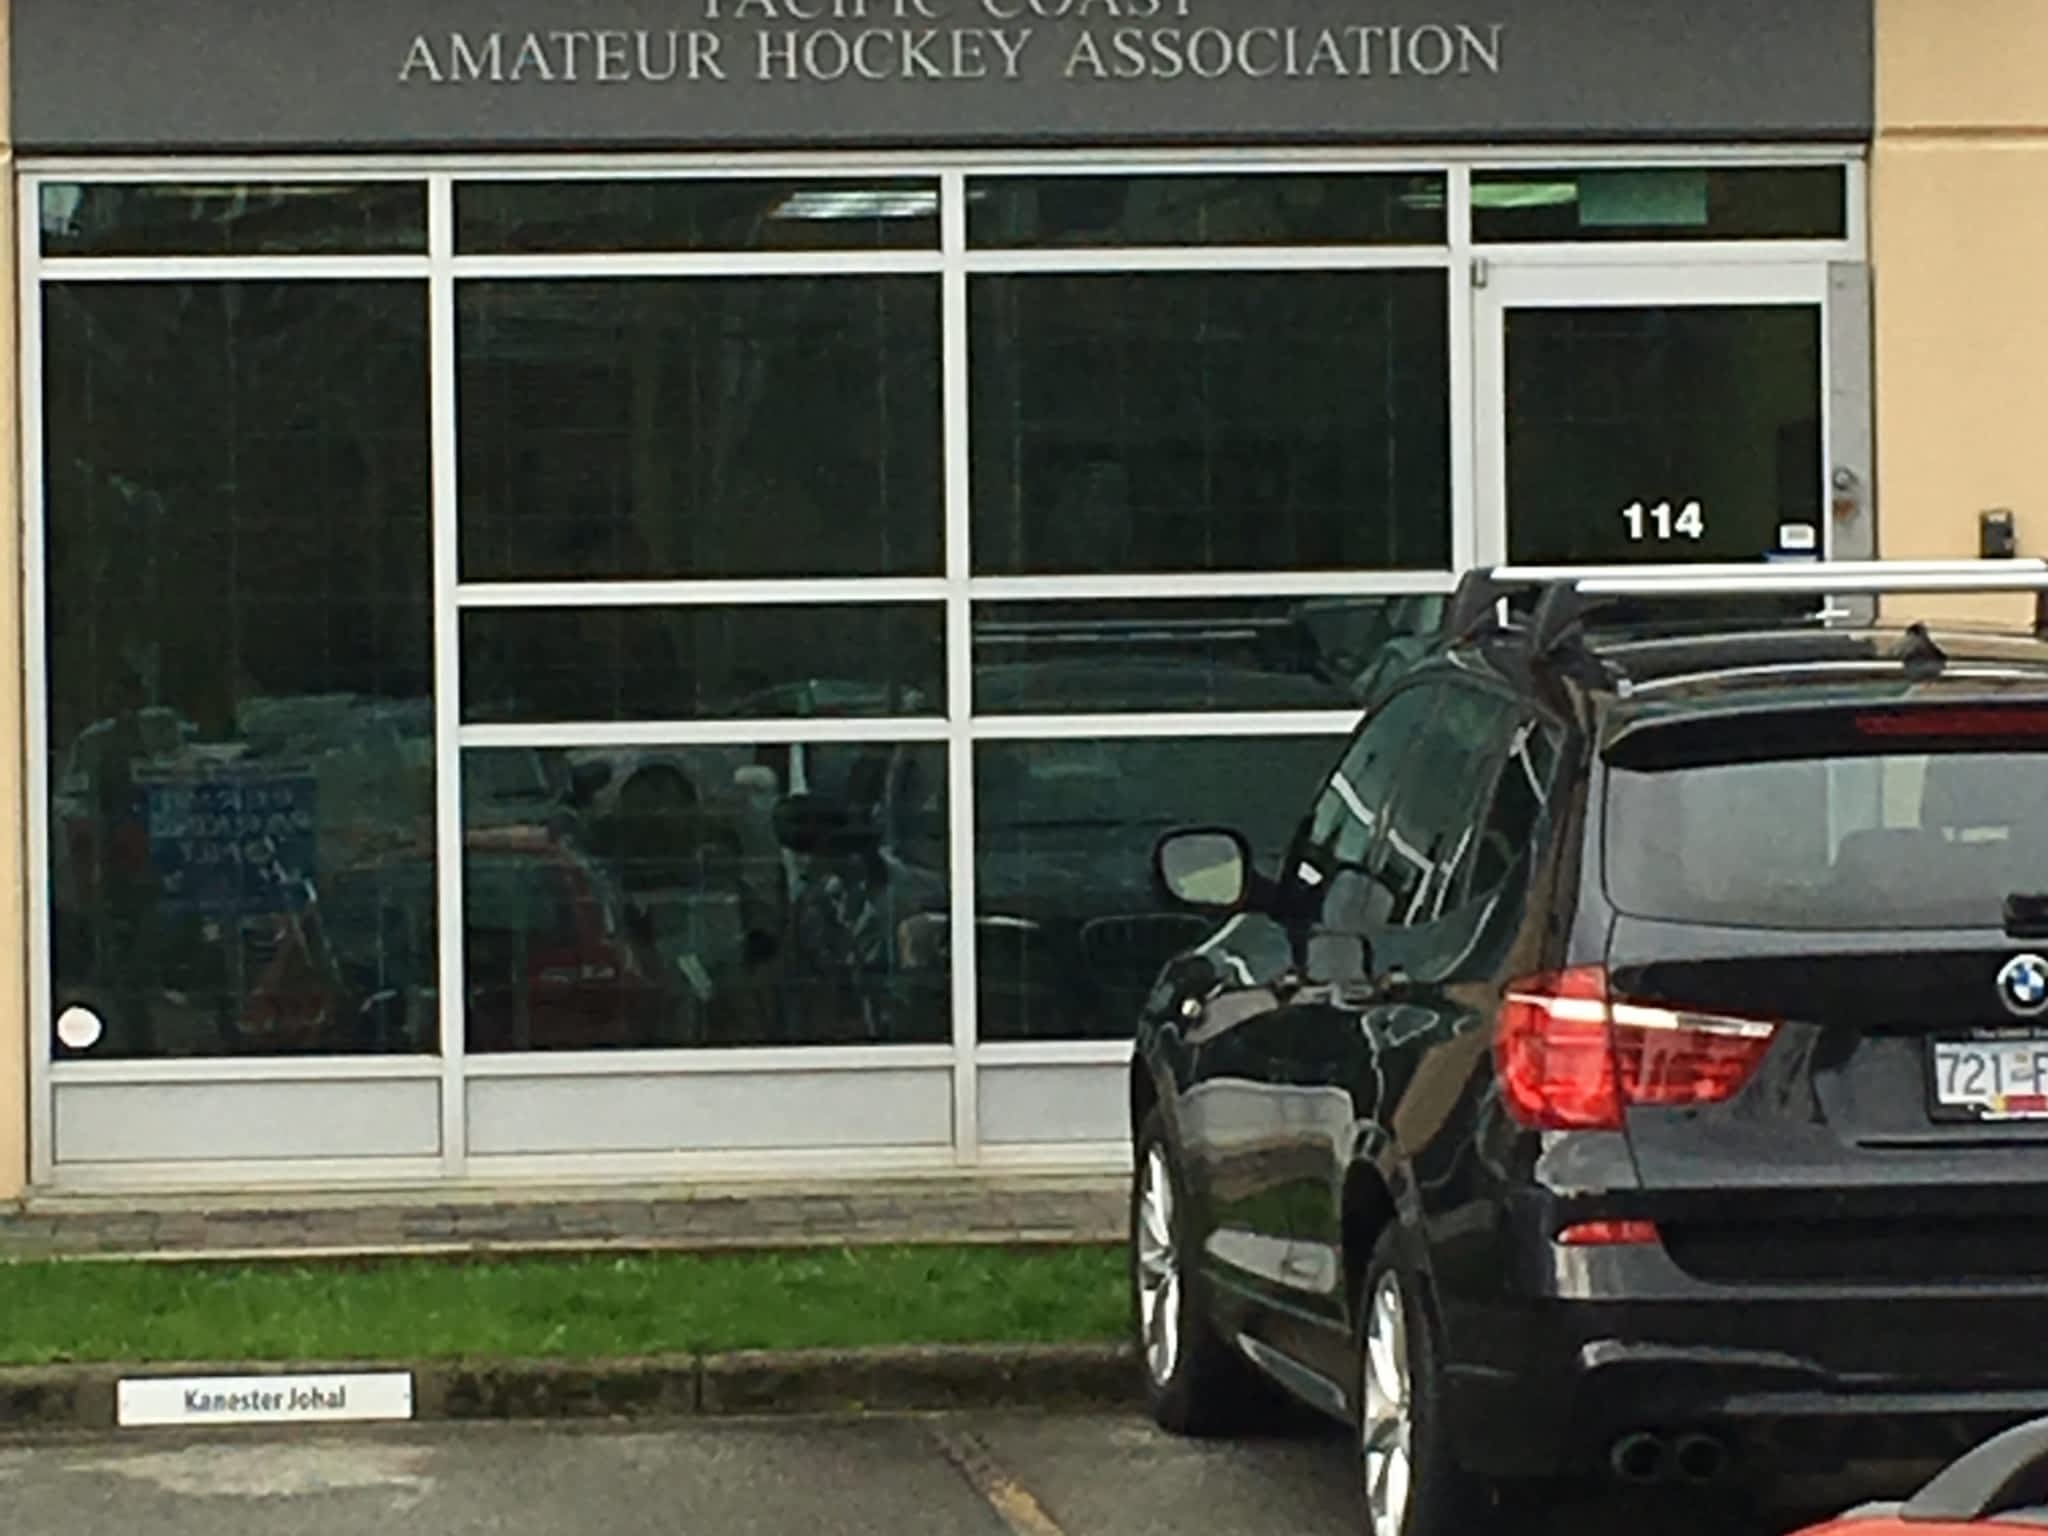 photo Pacific Coast Amateur Hockey Association